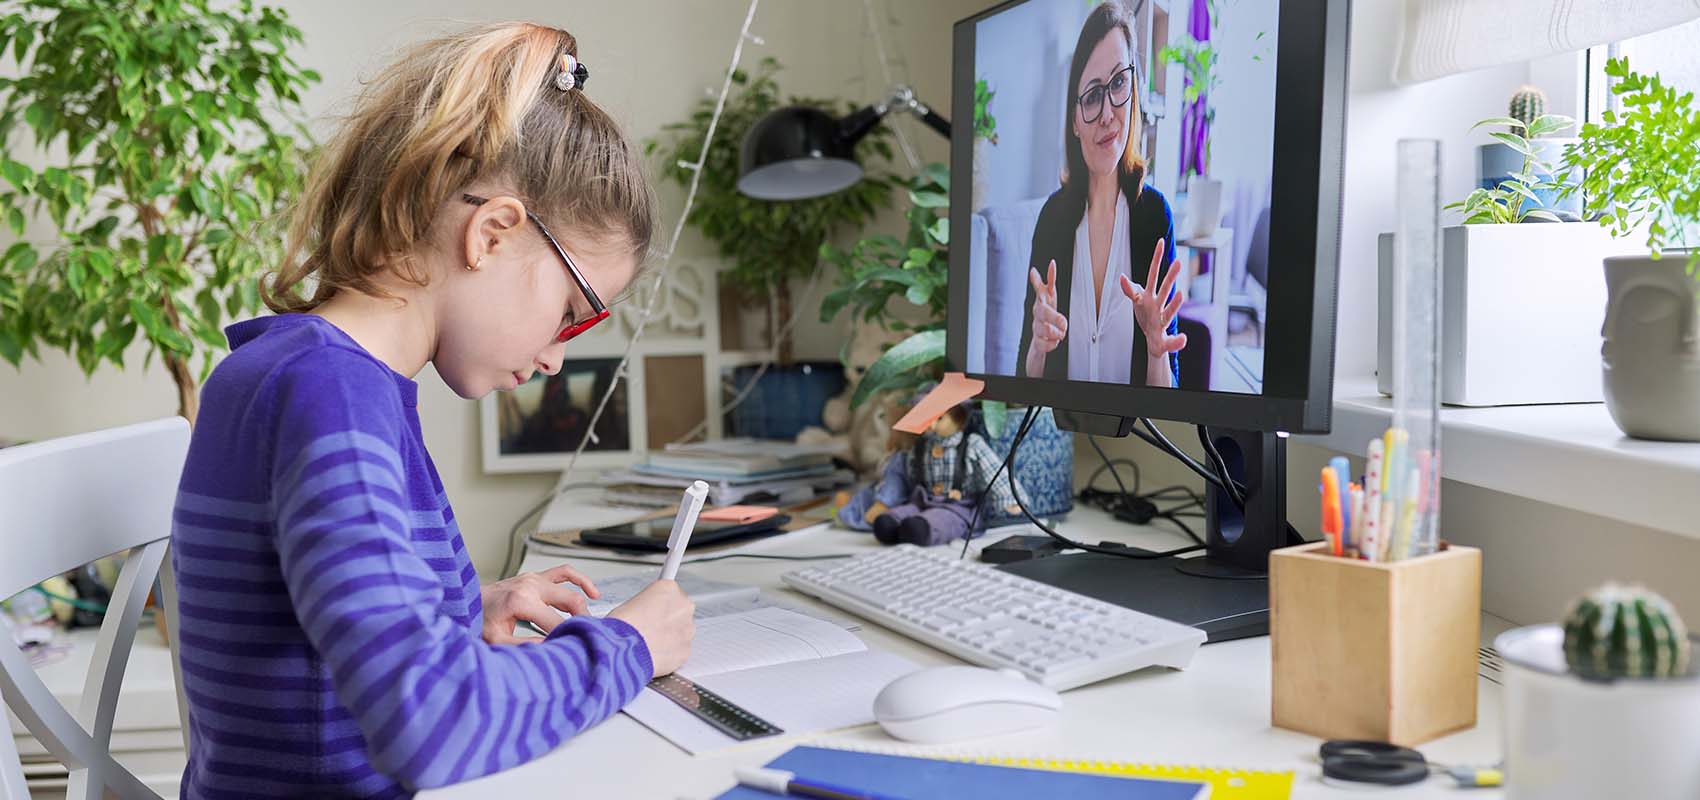 Student at desktop computer watching video or online teacher